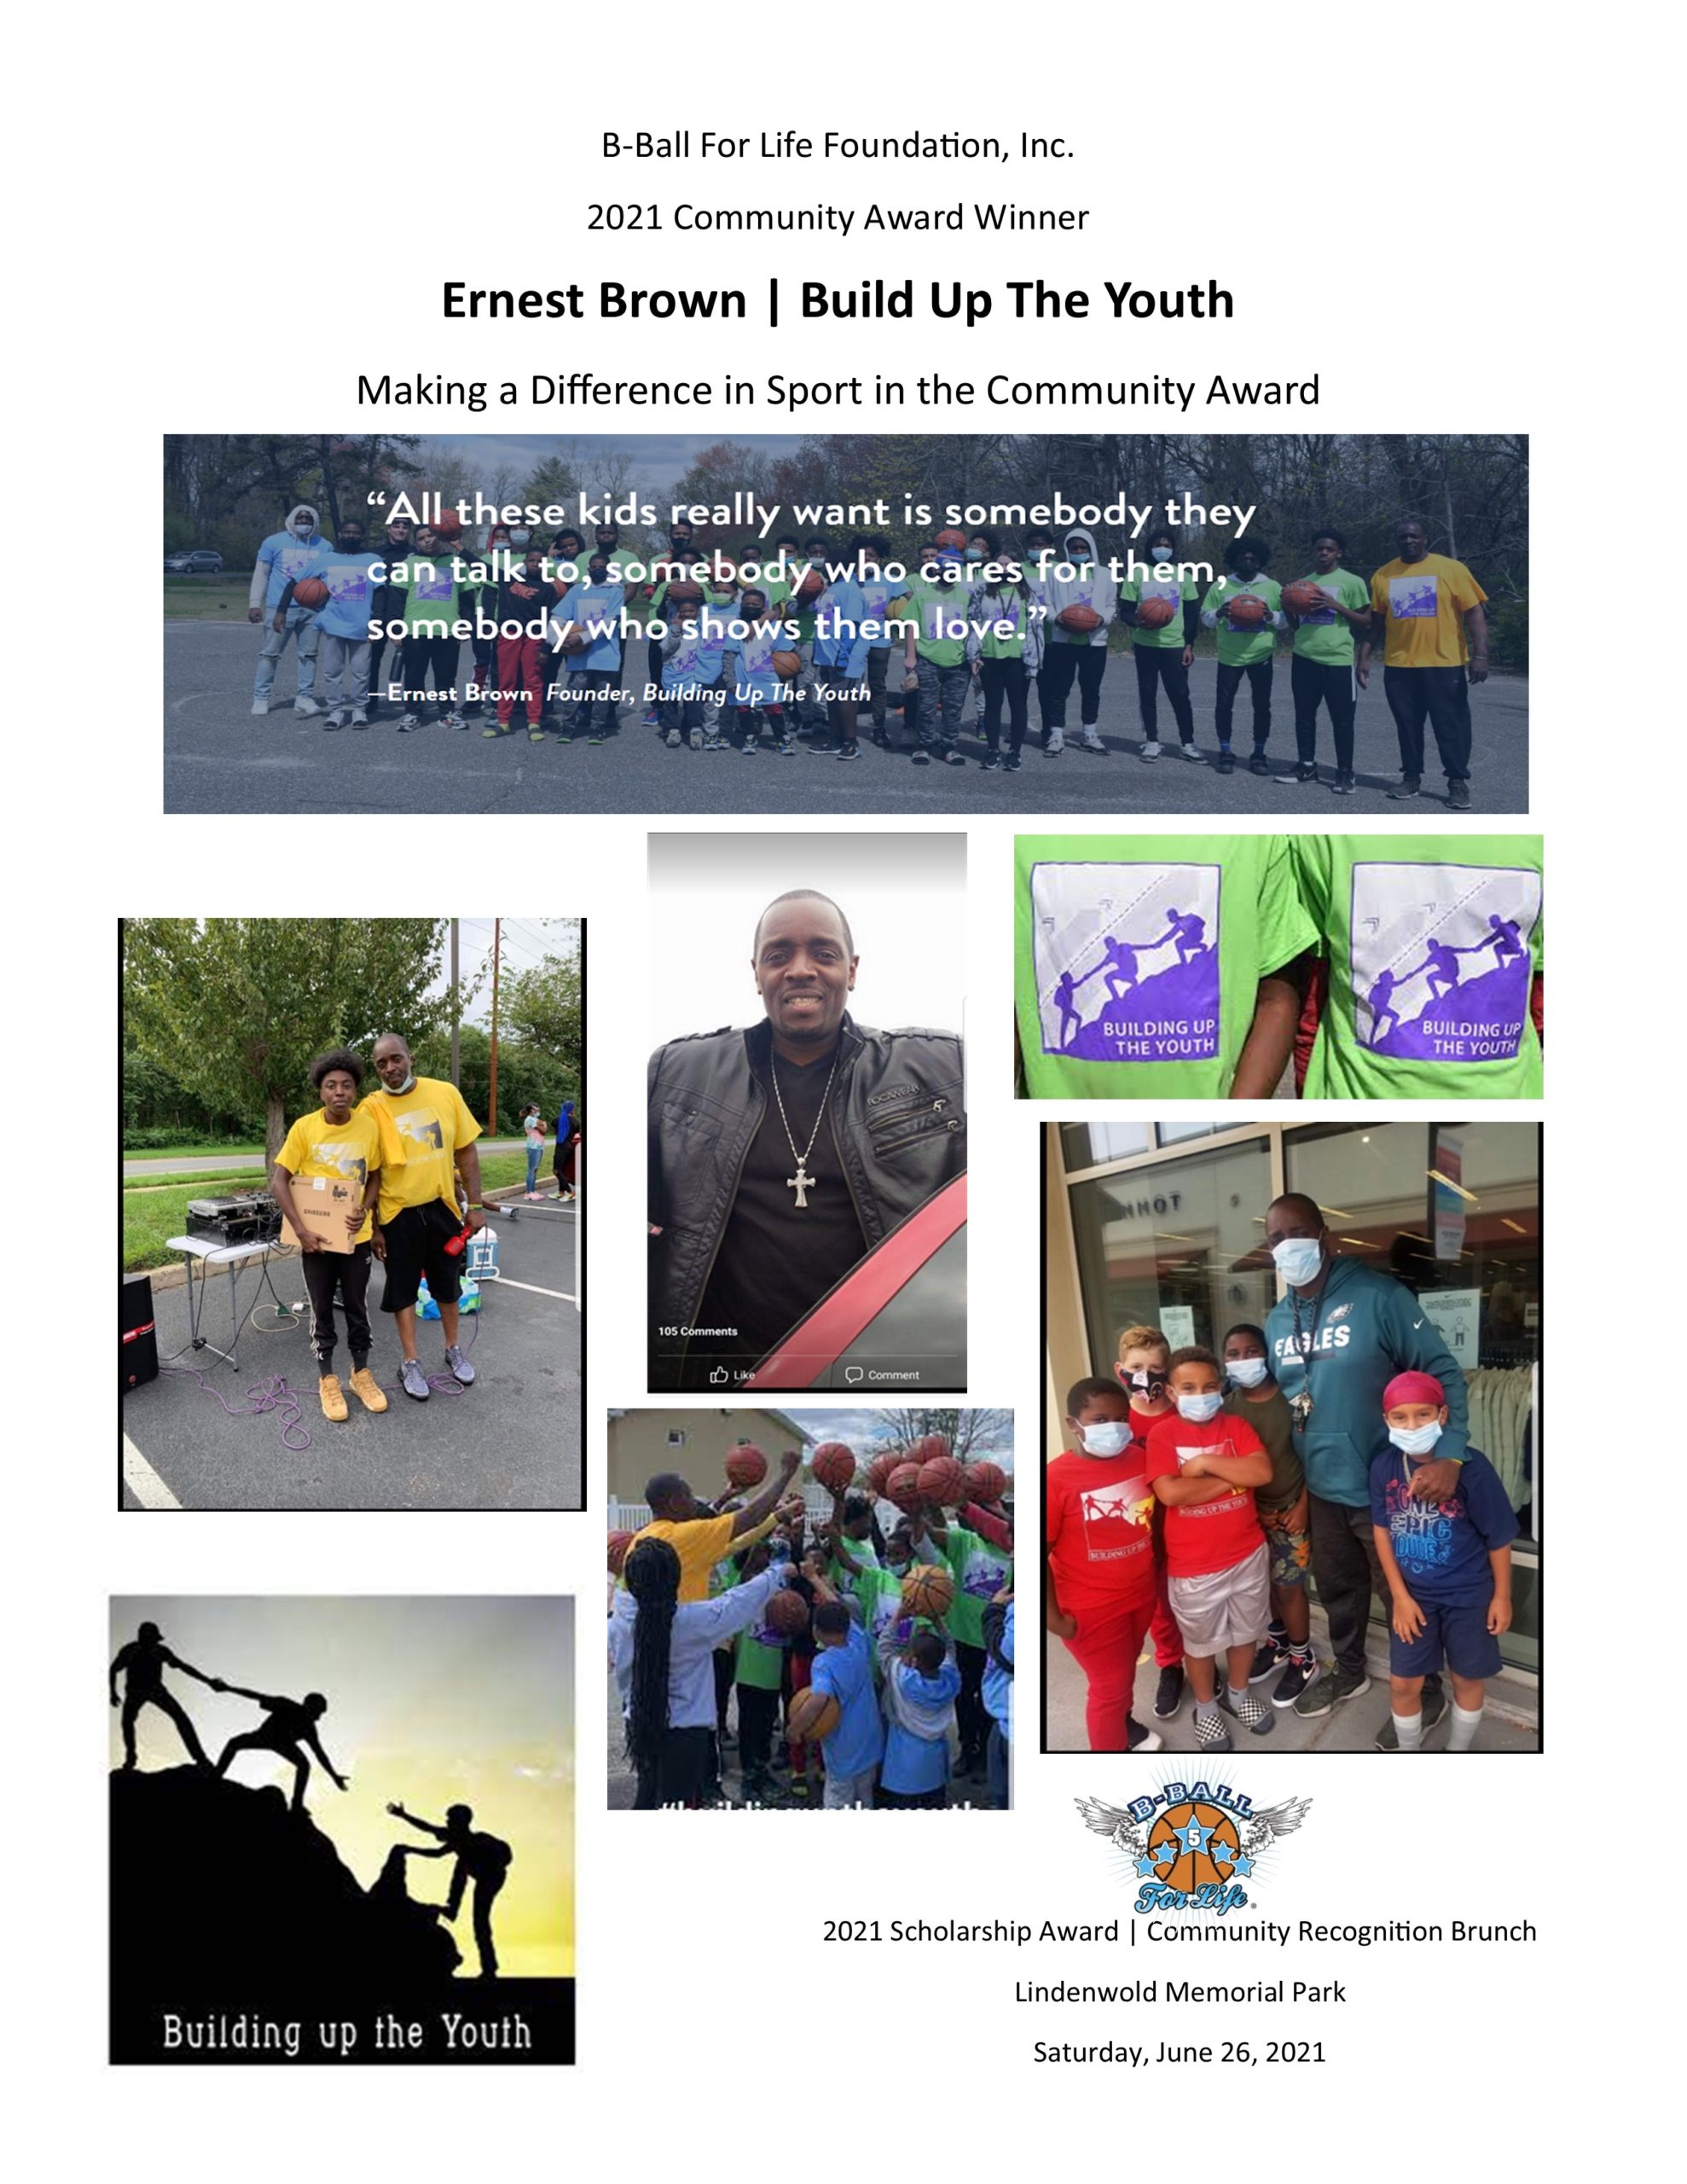 Ernest Brown - 2021 Community Award